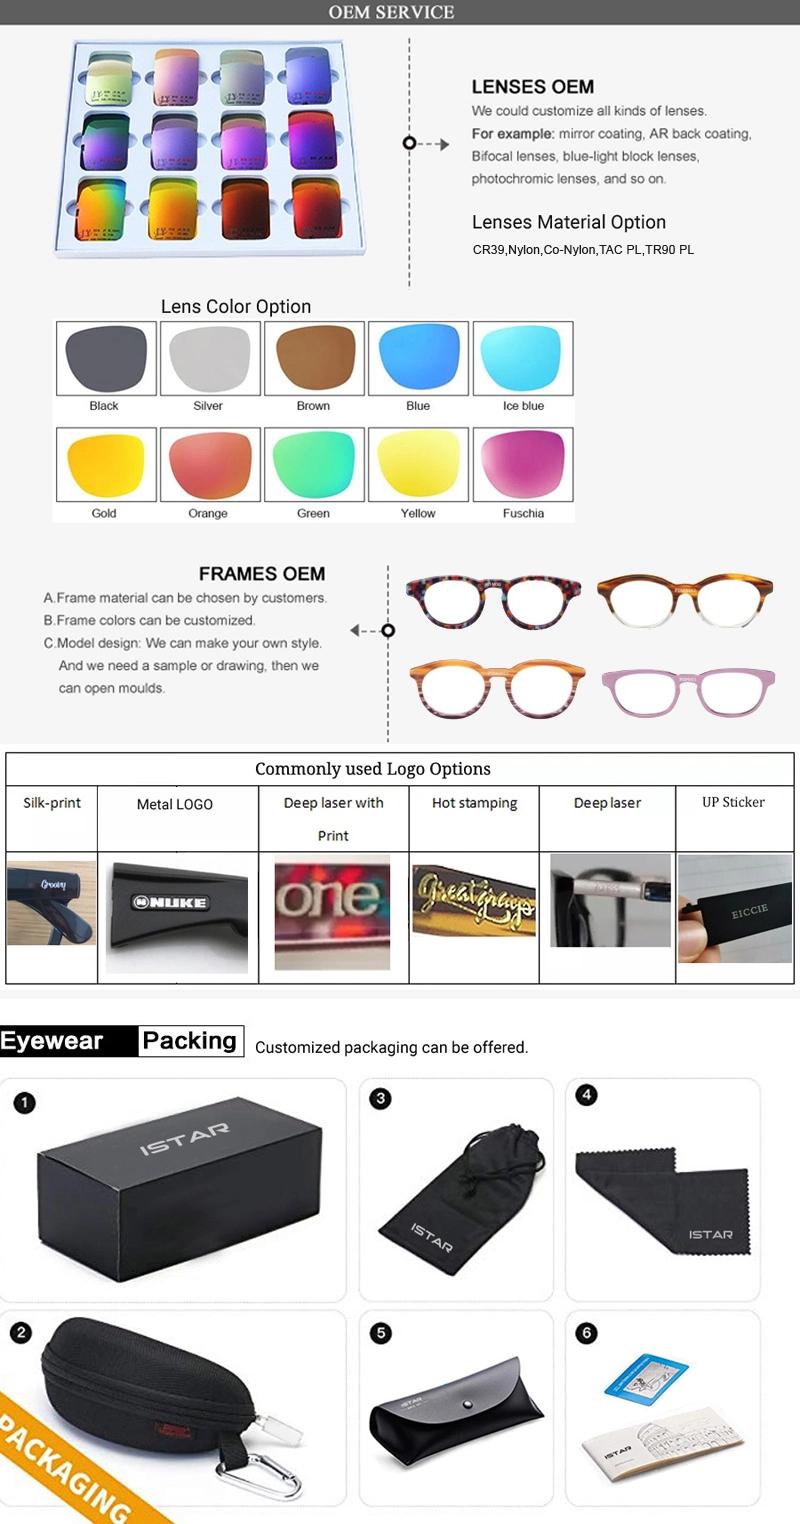 2022 New Design Full Lenses Style Big Round Handmade Acetate Sunglasses